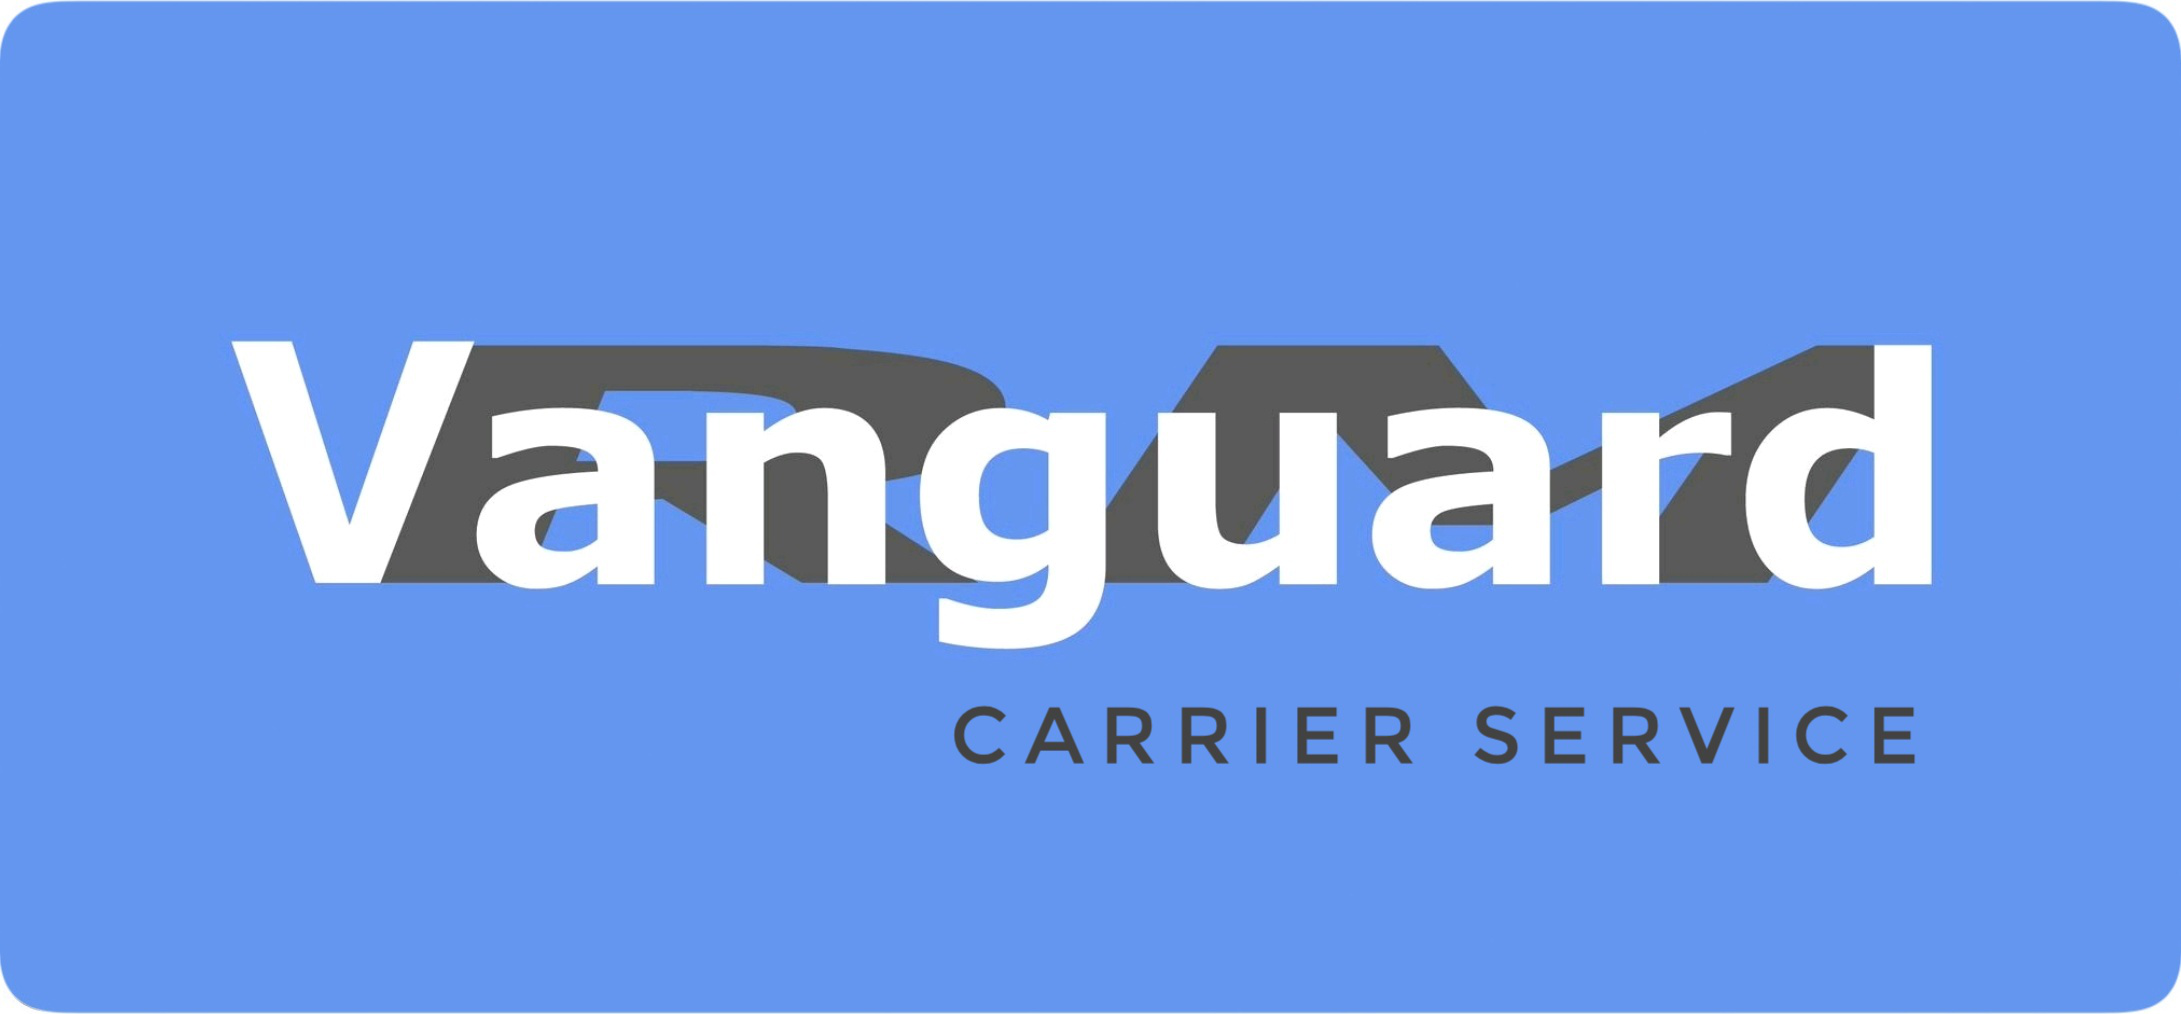 Vanguard Carrier Service